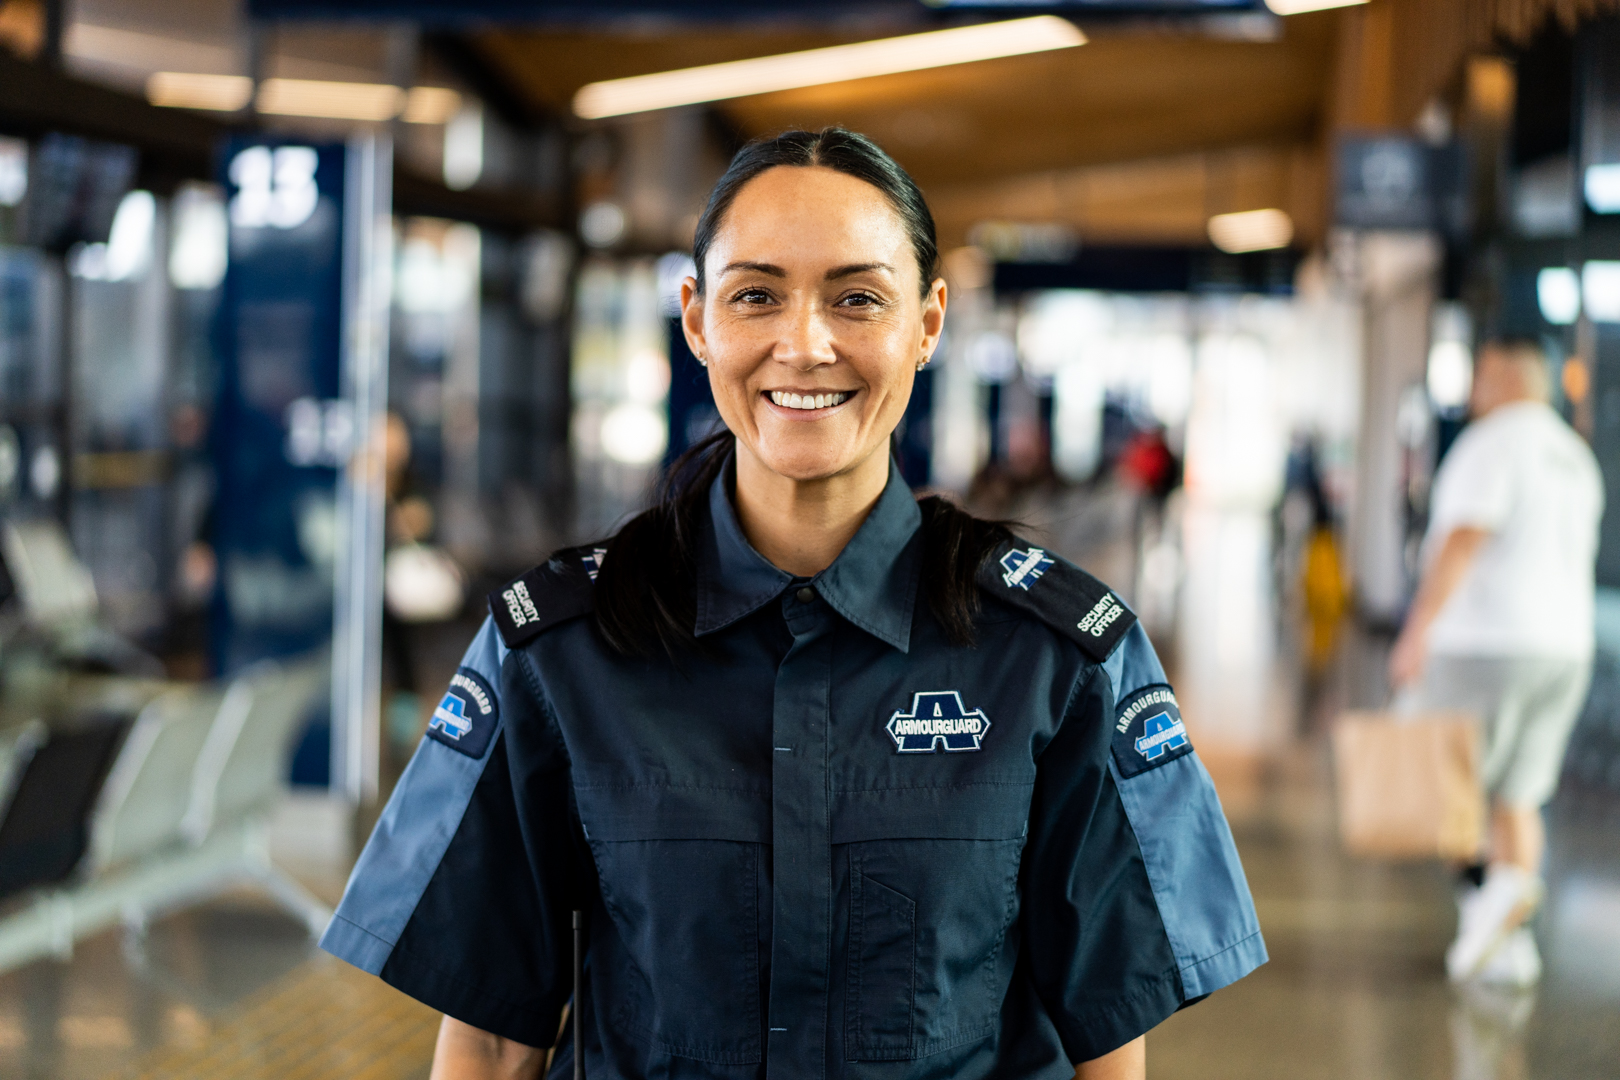 Female Armourguard mobile patrol officer at Manukau bus station